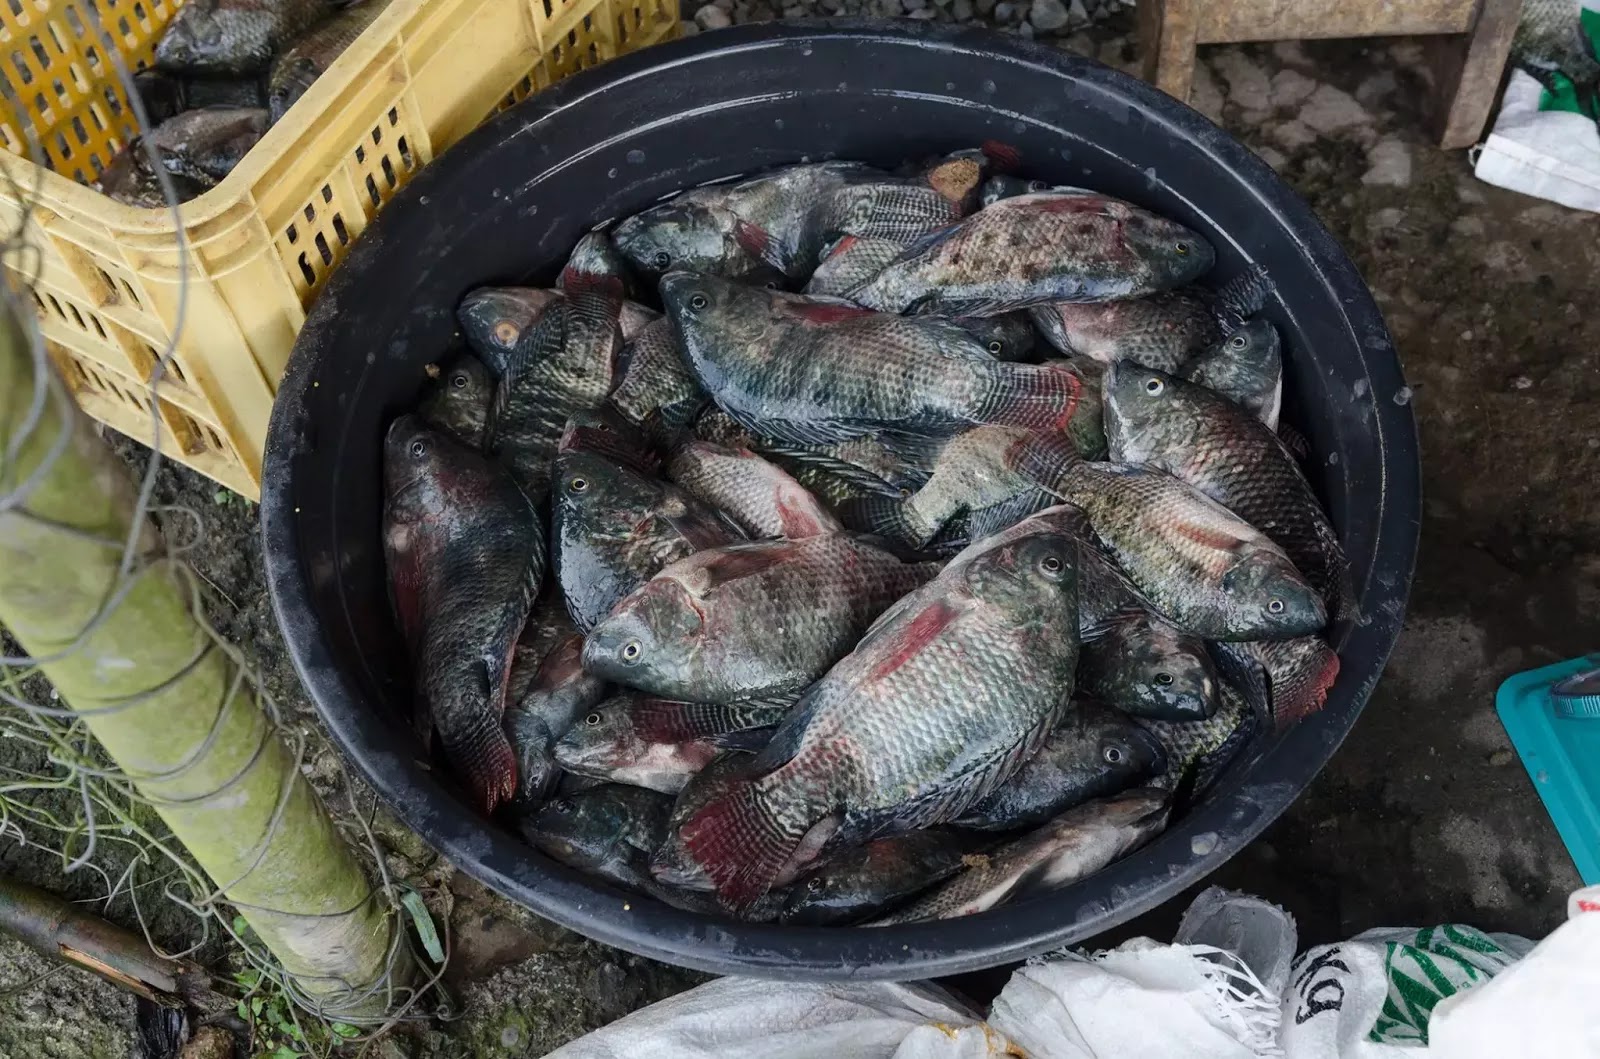 Gurel Bokod Benguet Cordillera Administrative Region Philippines Fish Vendor Fresh River Fish for Sale